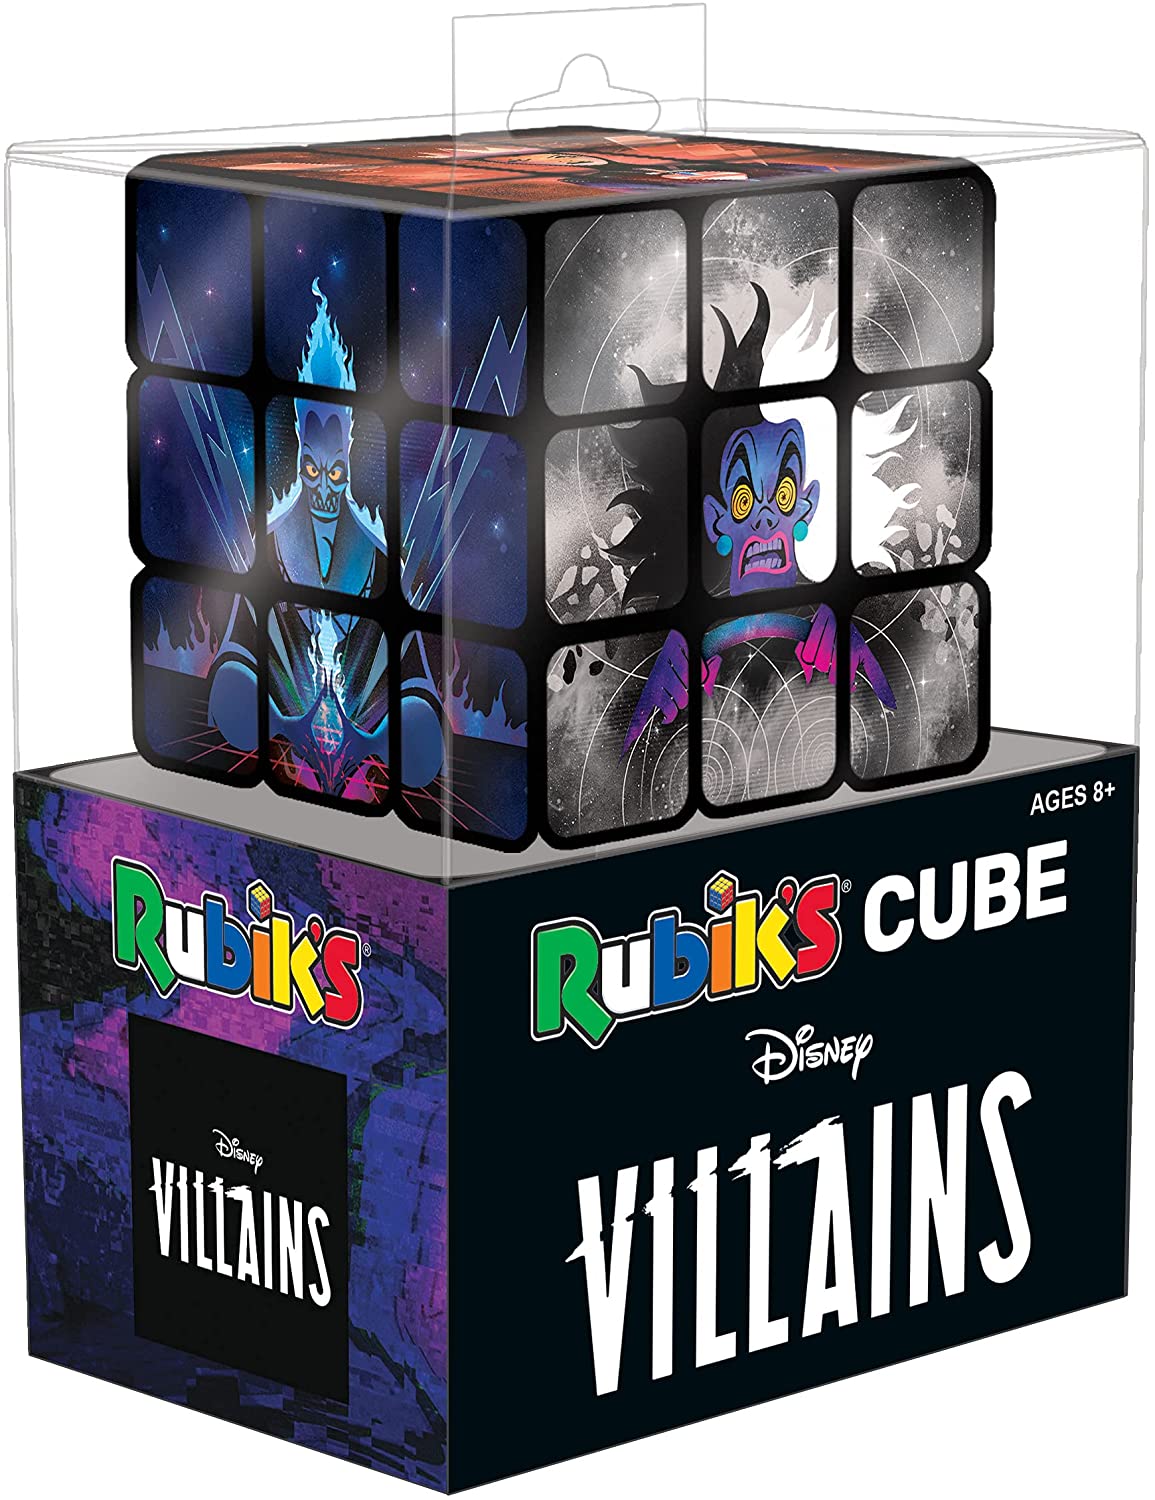 Rubik's Cube: Disney Villains